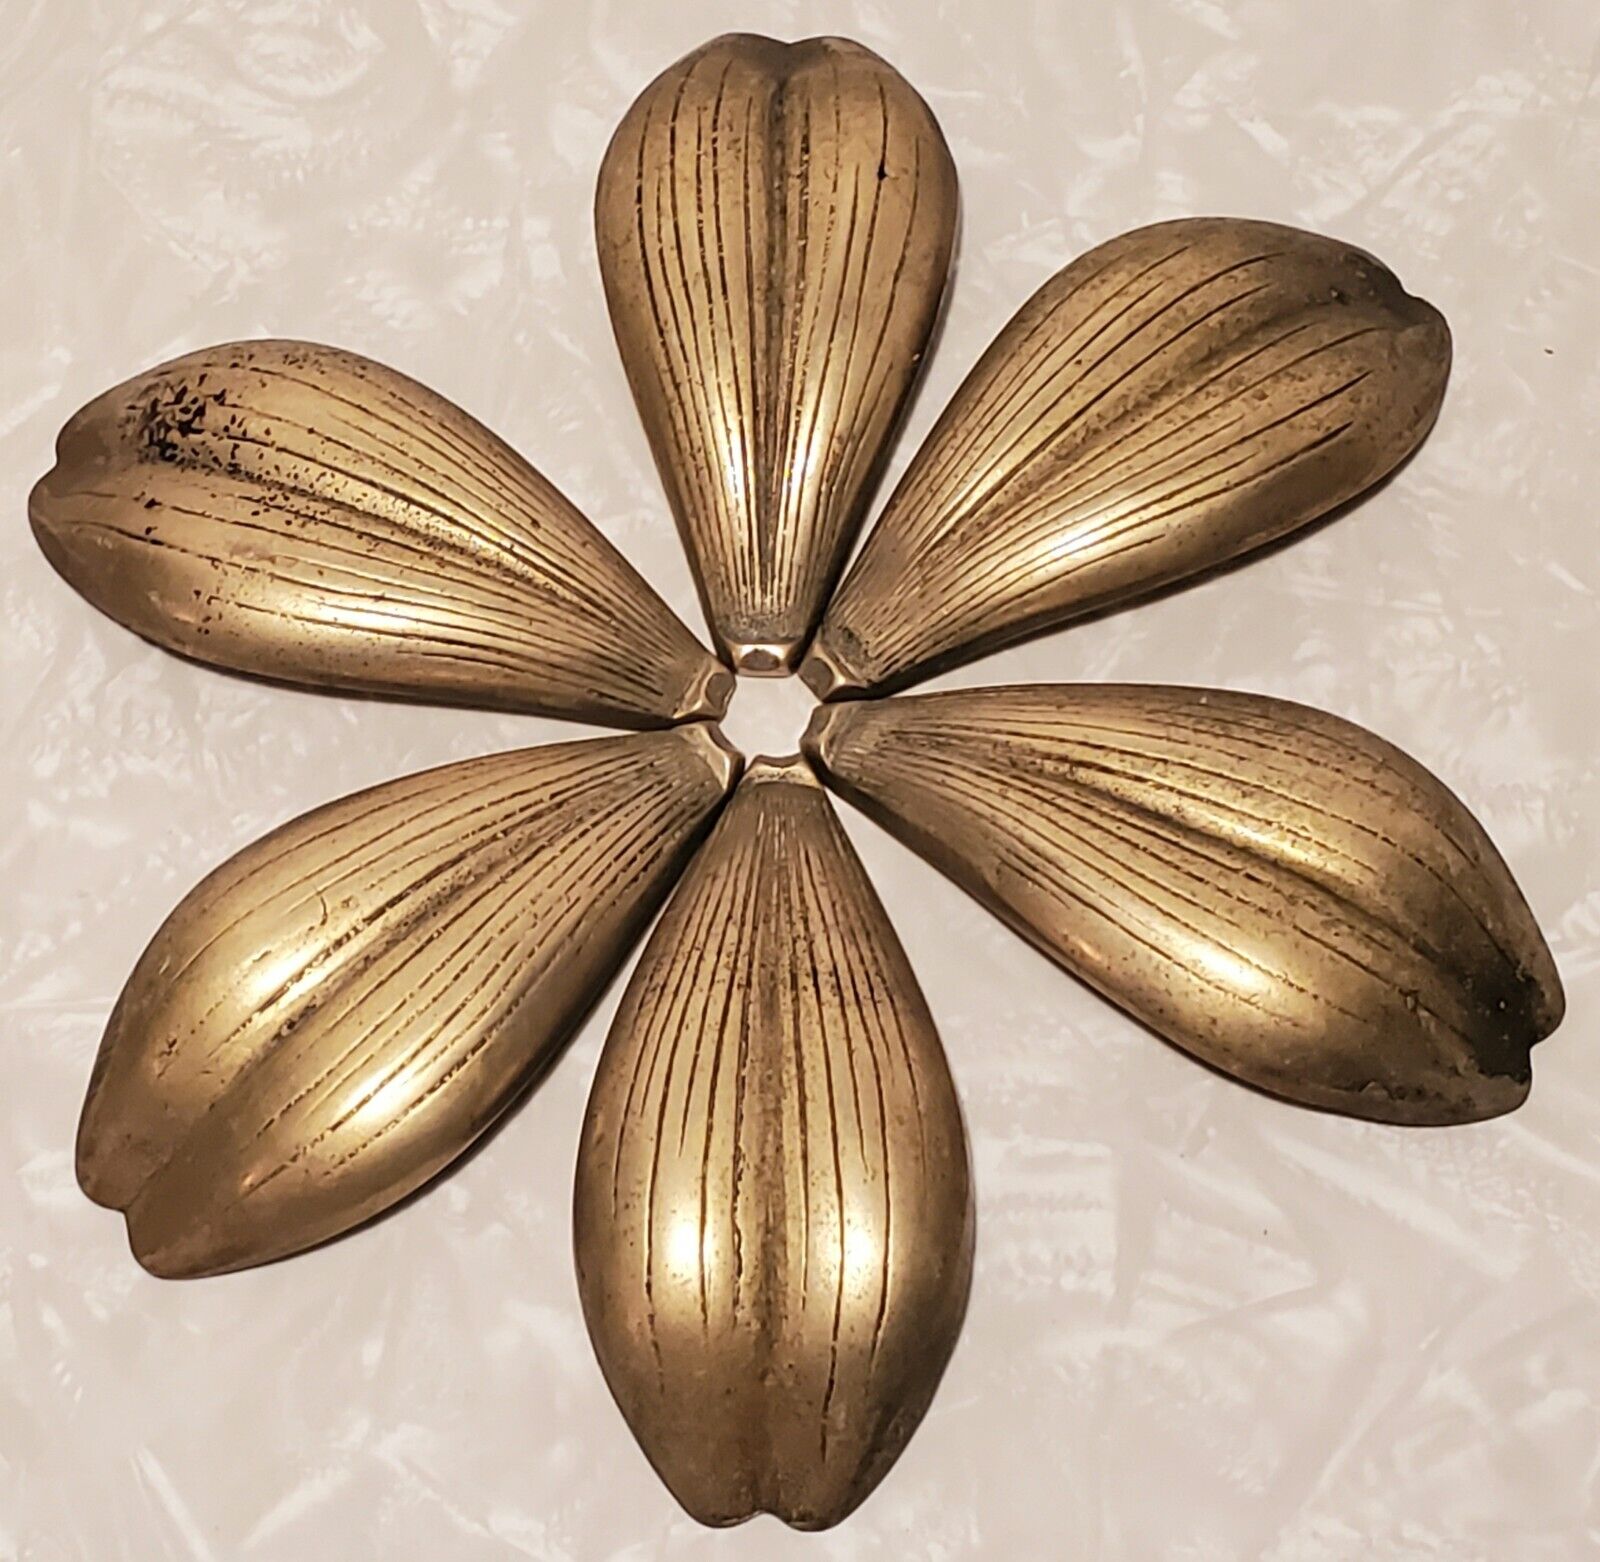 6 Brass Lotus Flower Petals ONLY Sculpture Ashtray Replacement Parts Vintage